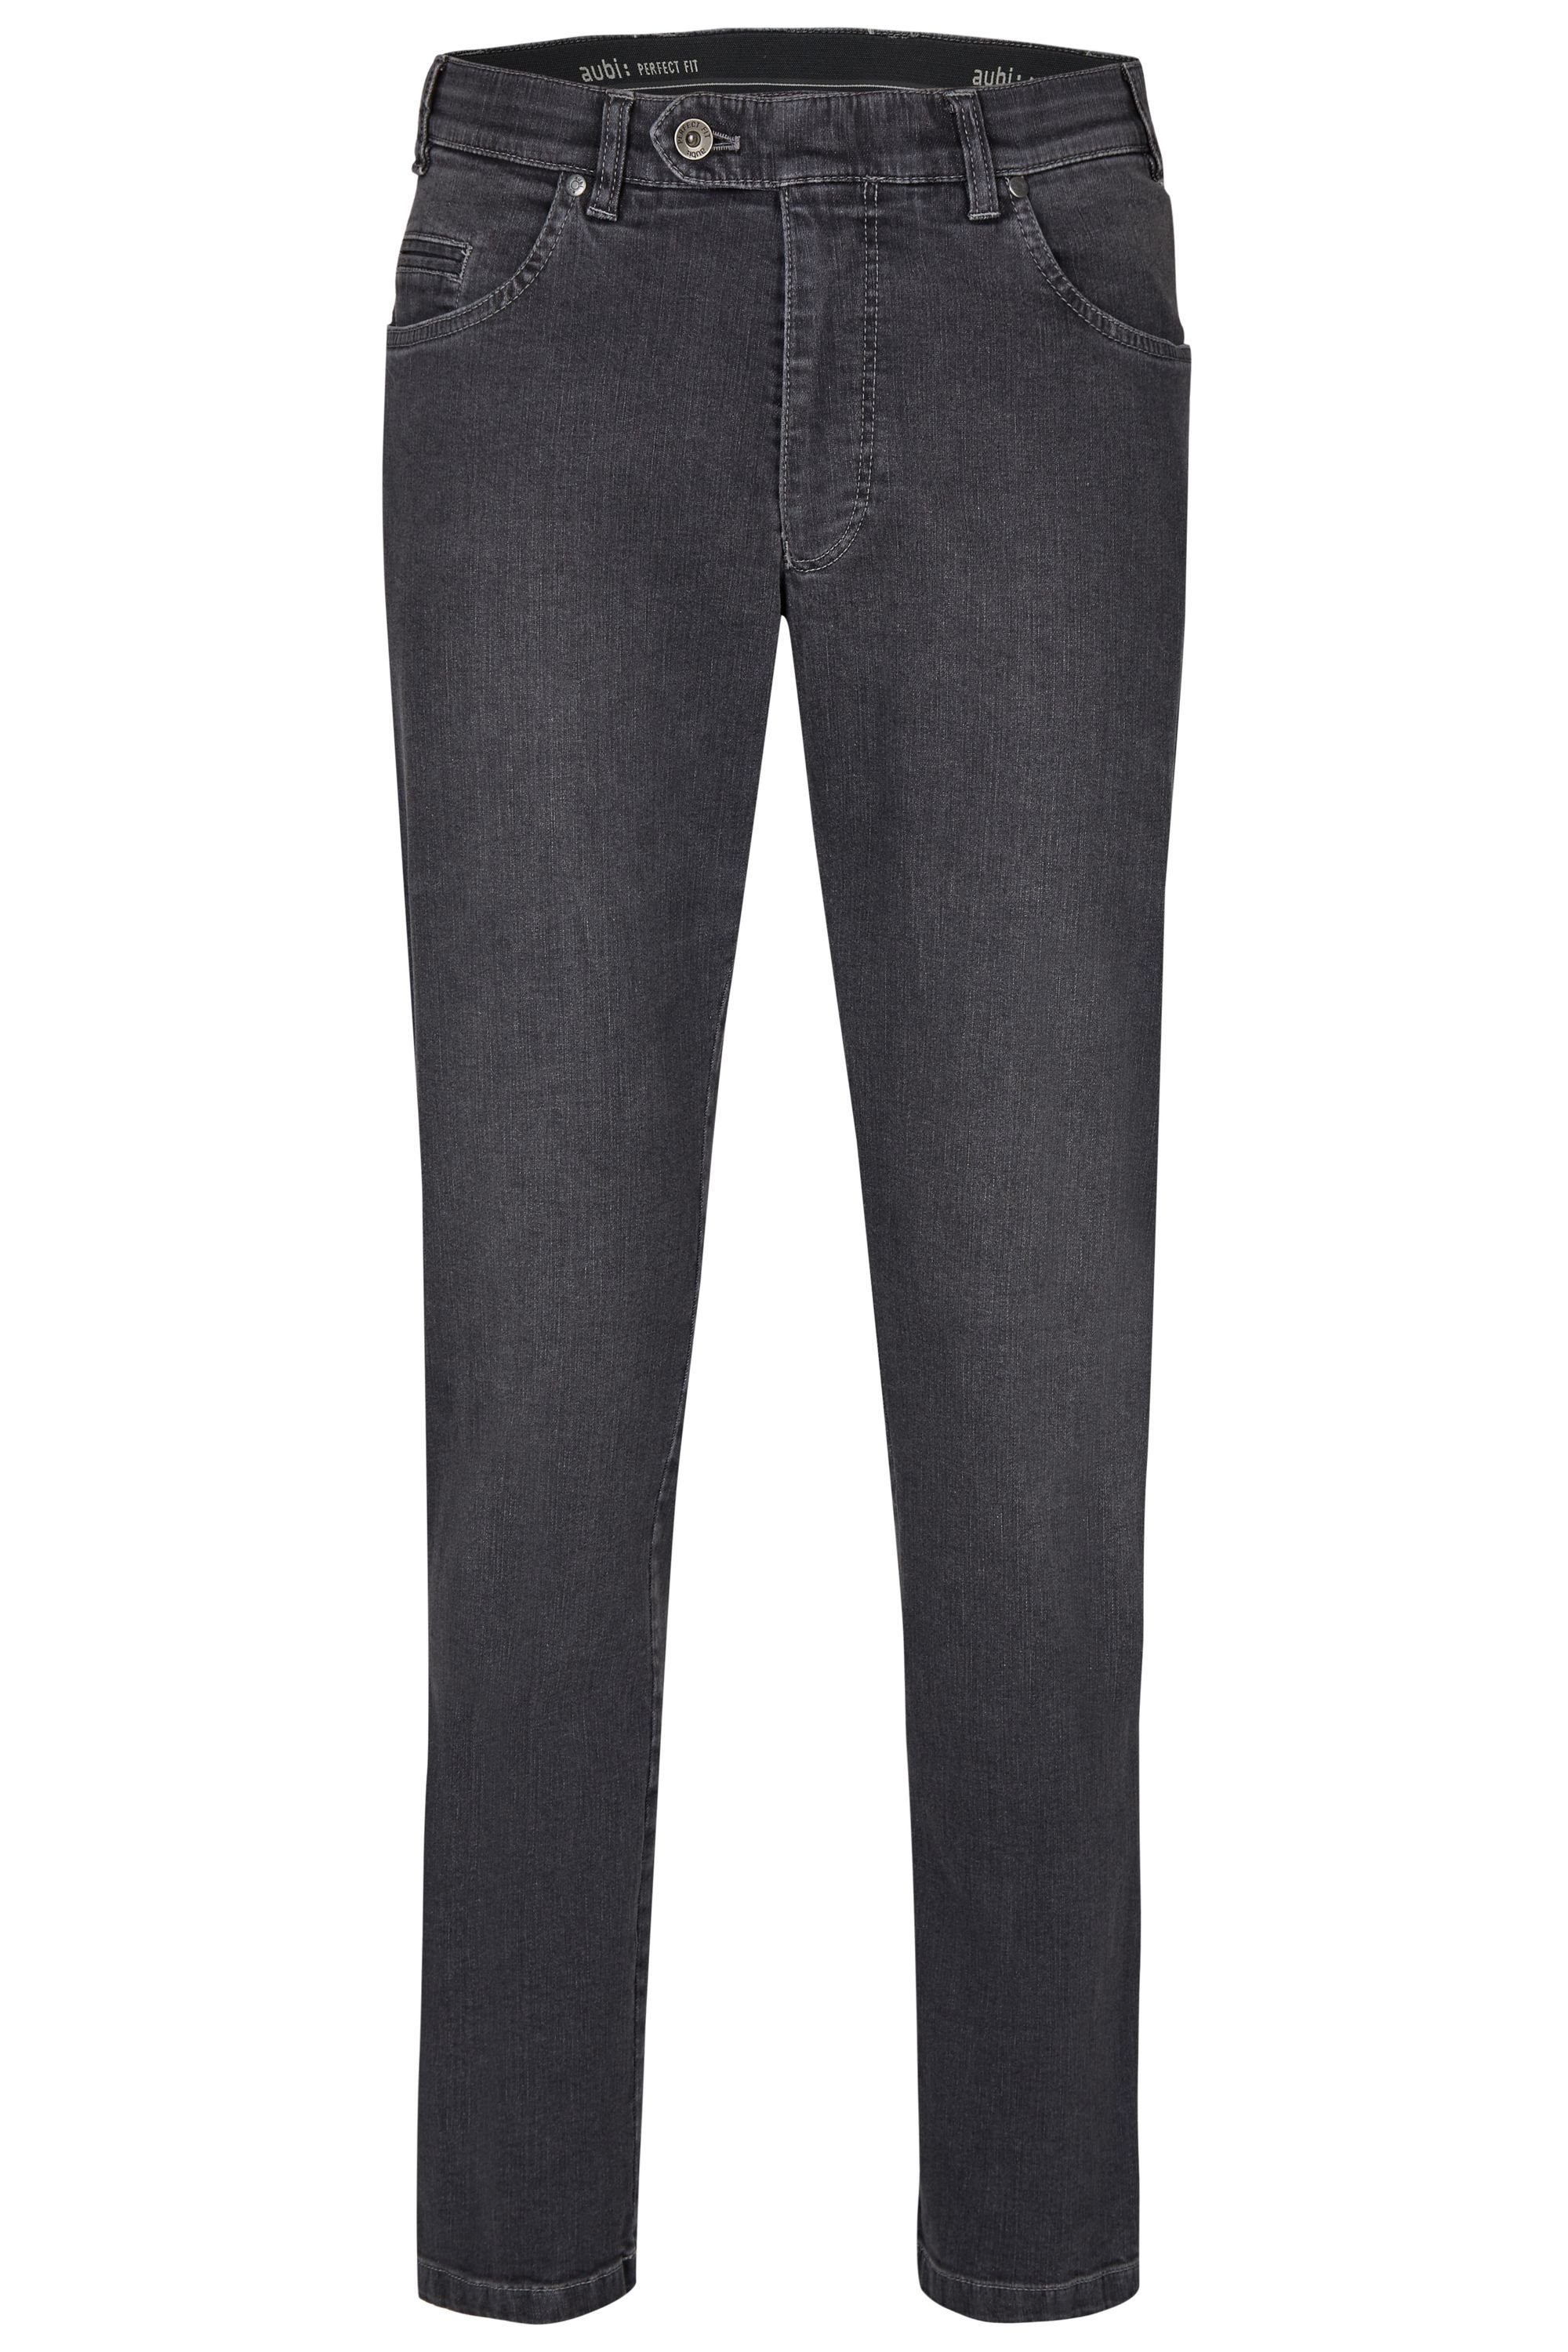 aubi: Bequeme Jeans aubi Perfect soft 577 High Jeans Fit Flex Stretch Herren grey used Baumwolle Hose (53) Modell aus